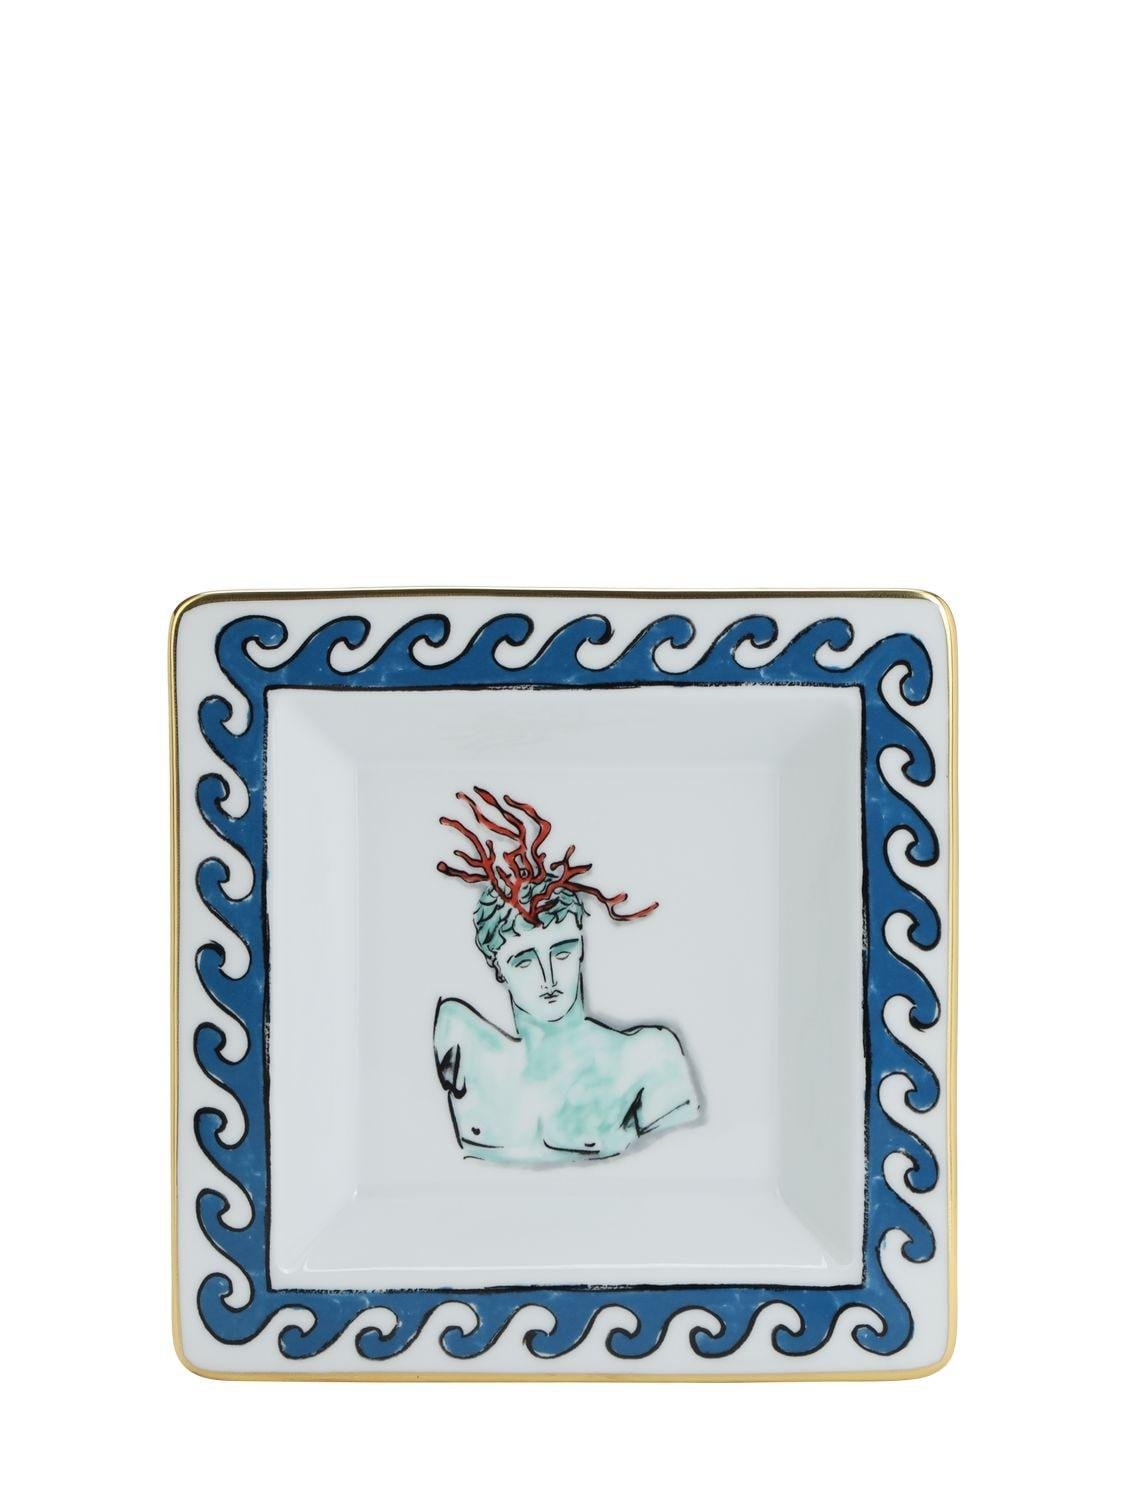 18cm Nettuno Square Porcelain Valet Tray by GINORI 1735